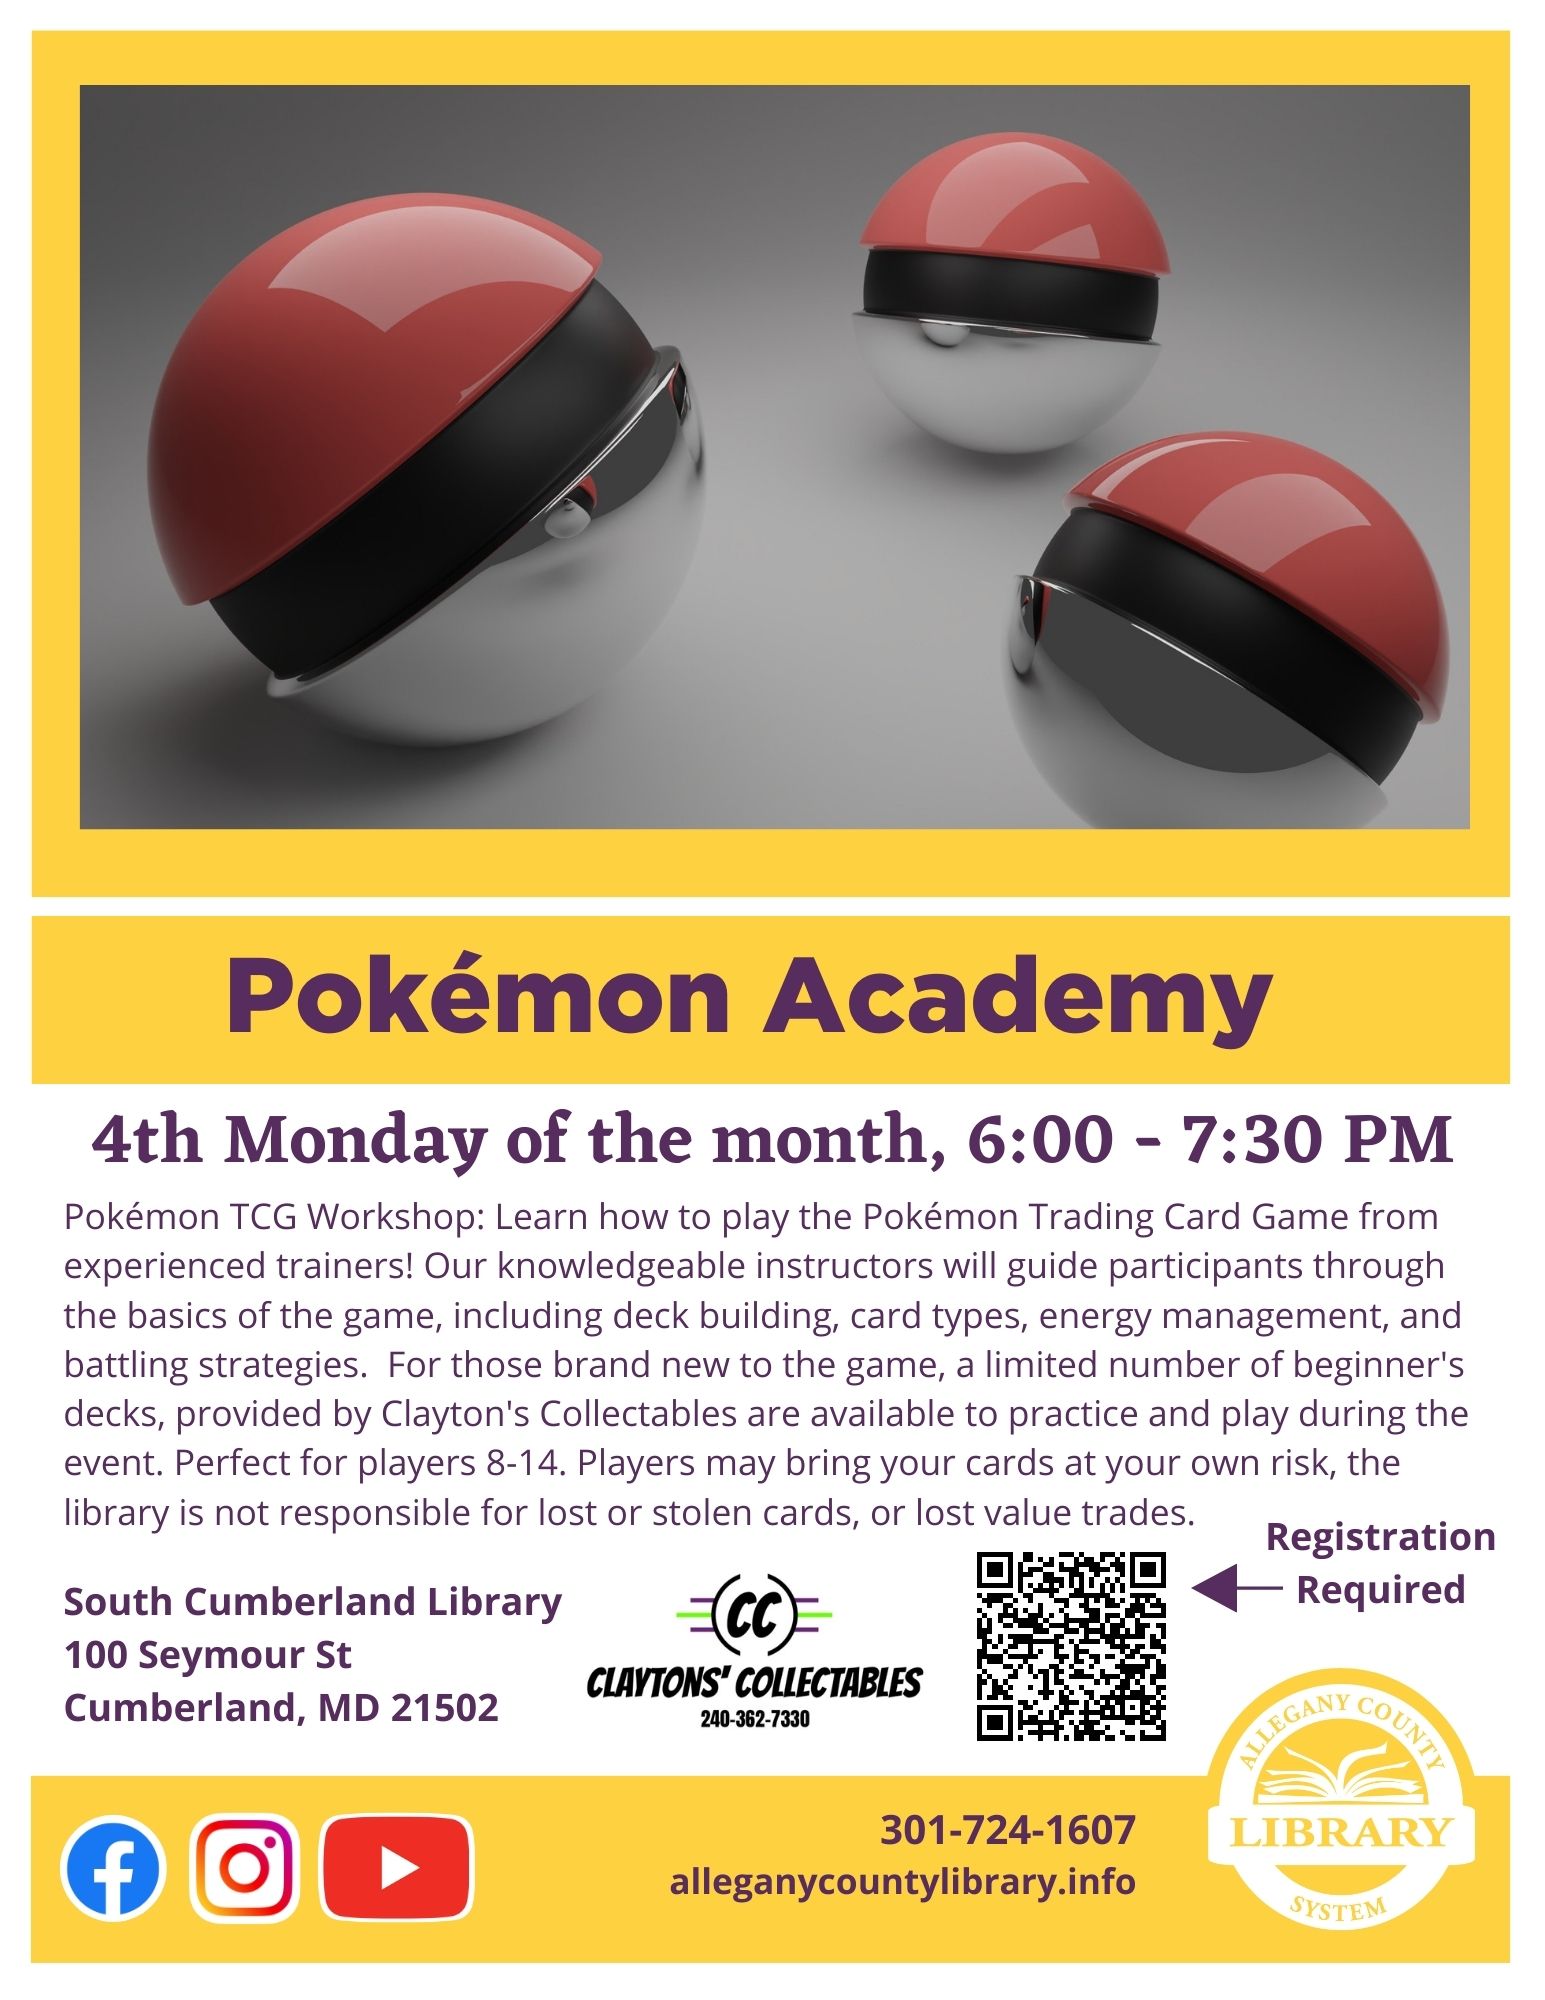 Pokemon Academy flyer